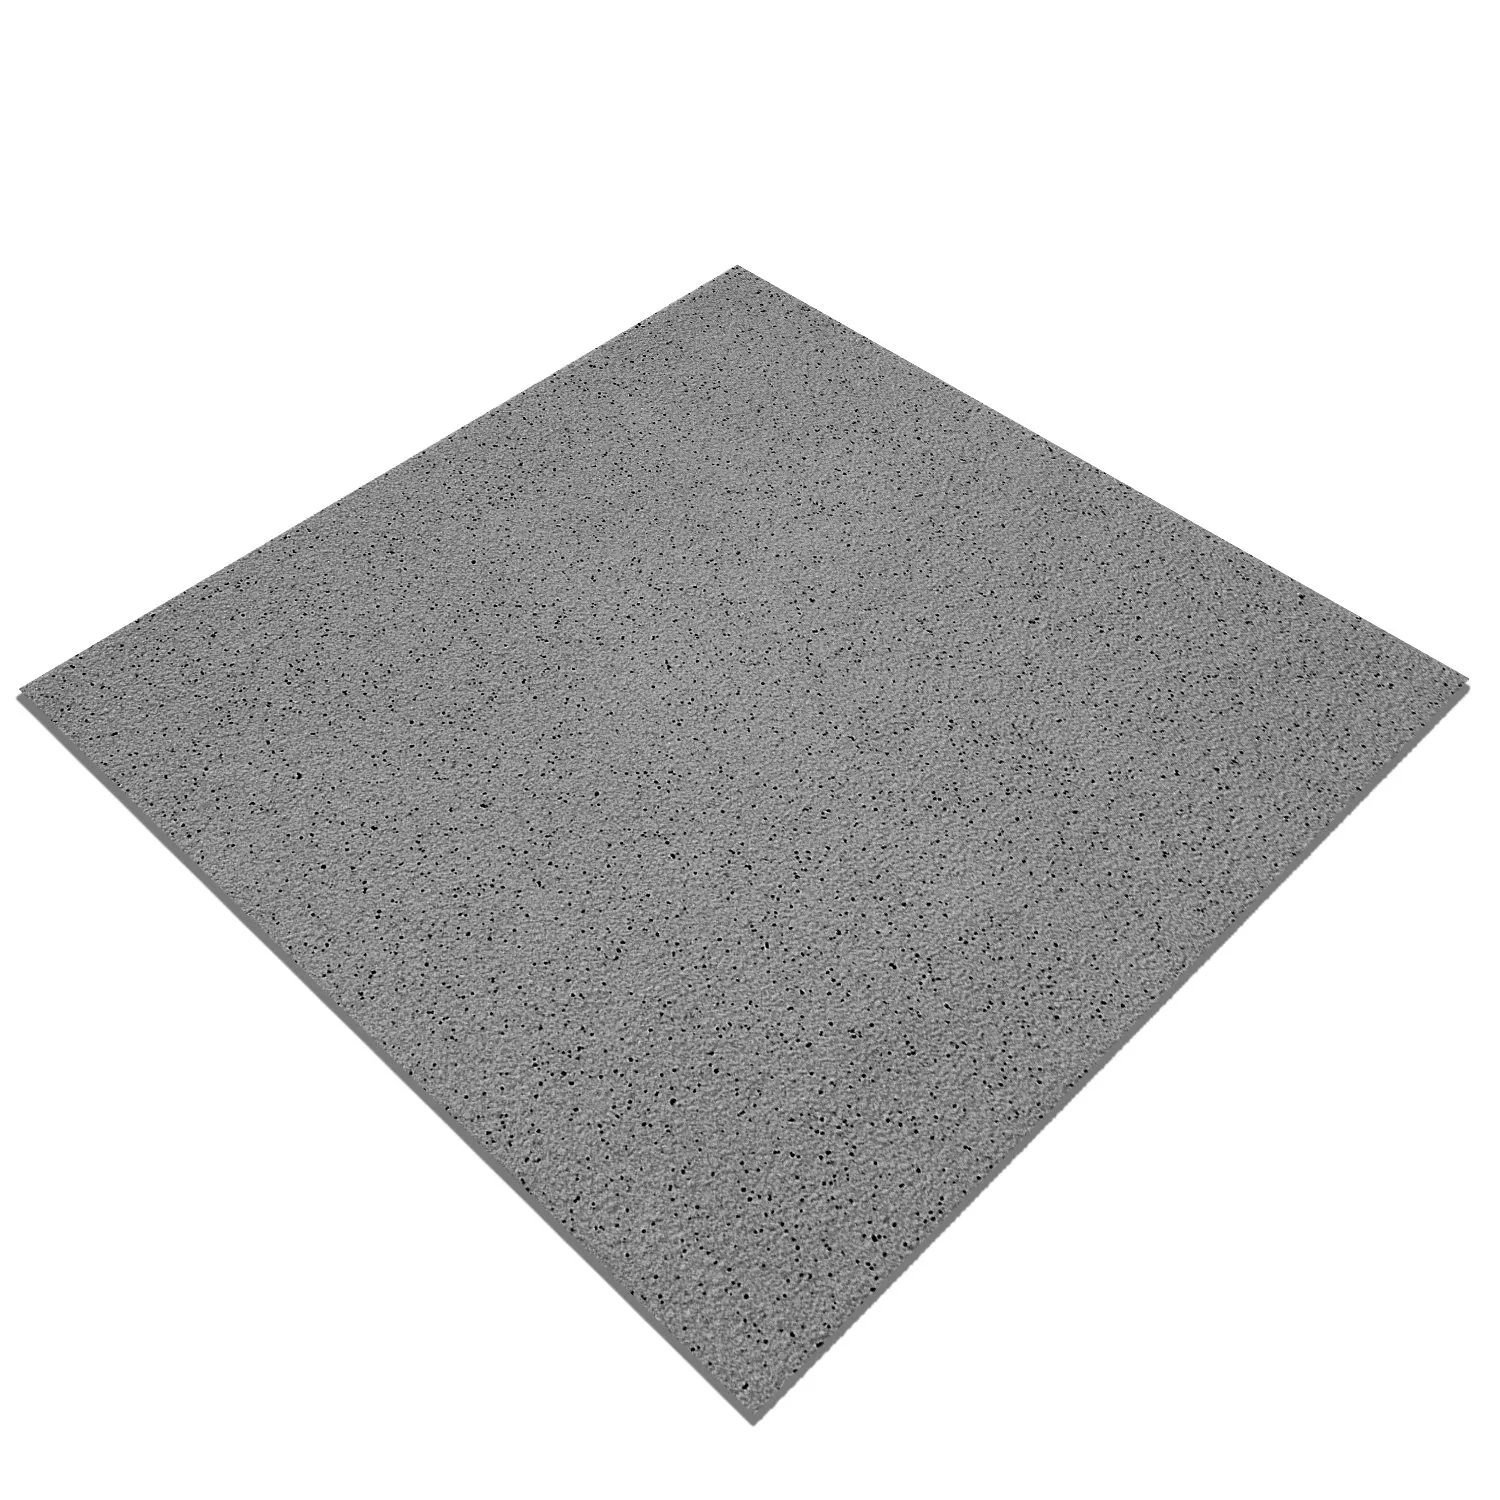 Sample Floor Tiles Fine Grain R10/A Anthracite 20x20cm